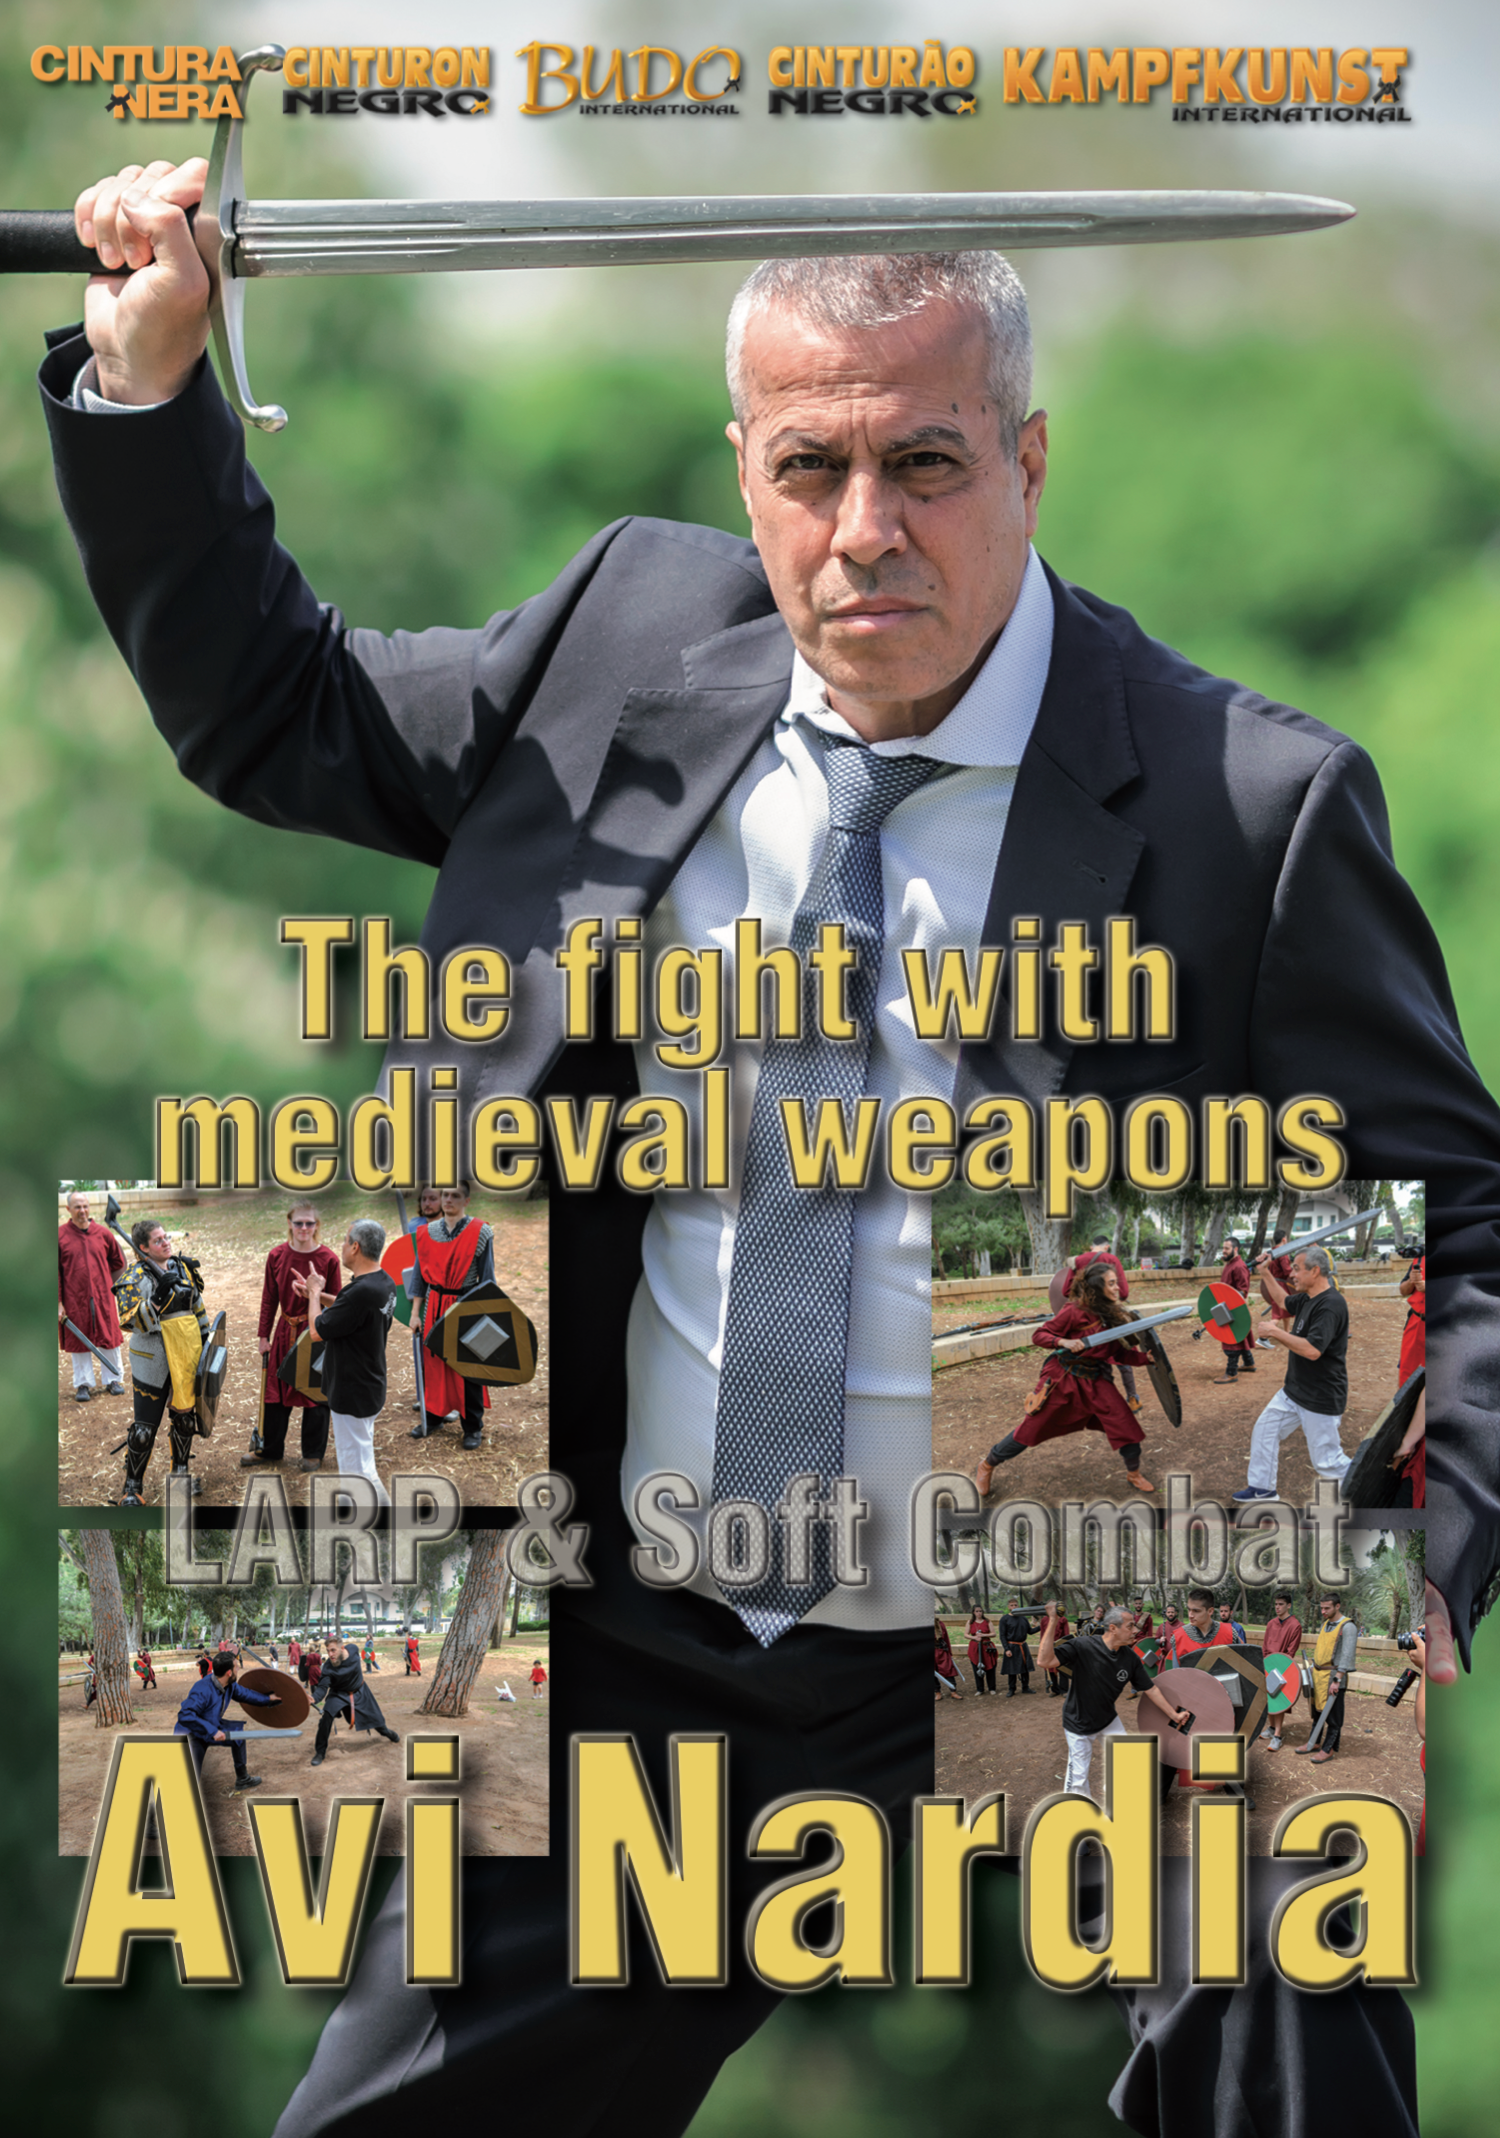 Medieval Sword Combat for Actors DVD by Avi Nardia